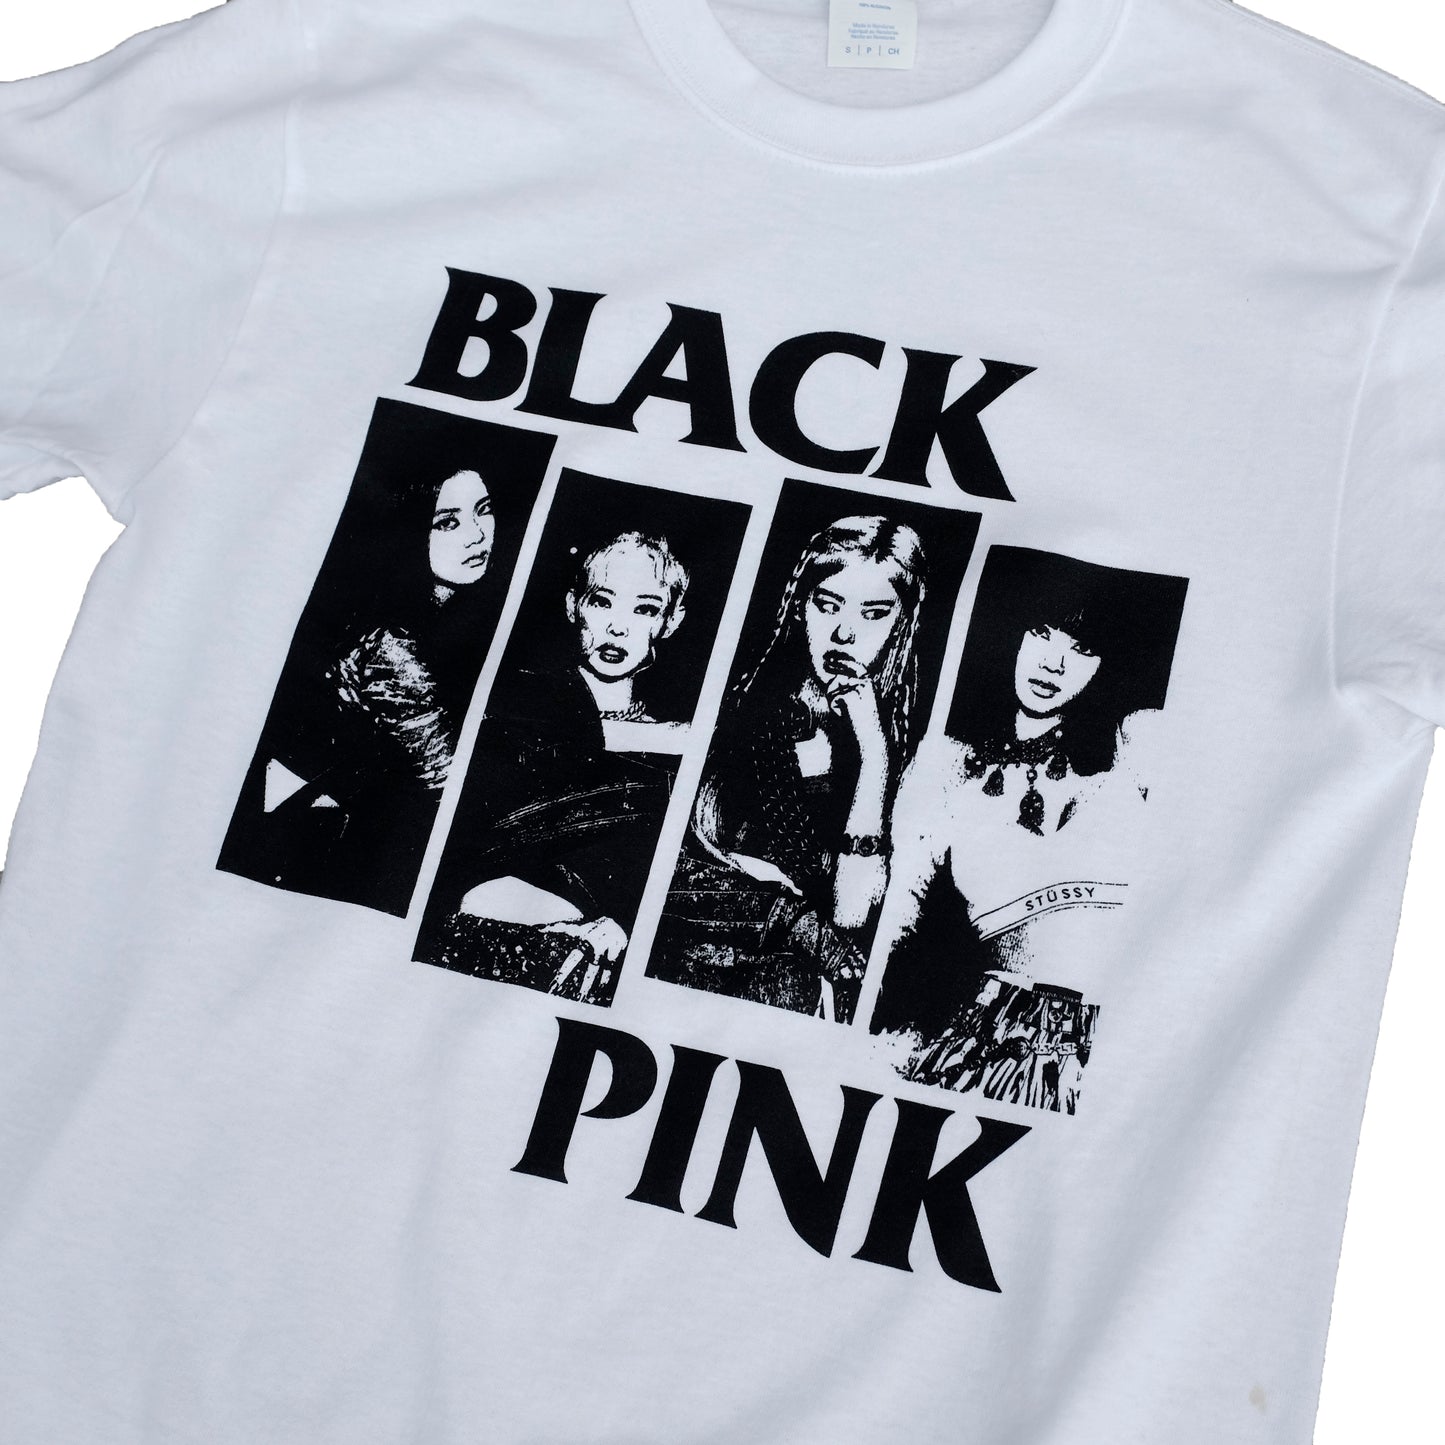 BLACKPINK Black Flag parody shirt